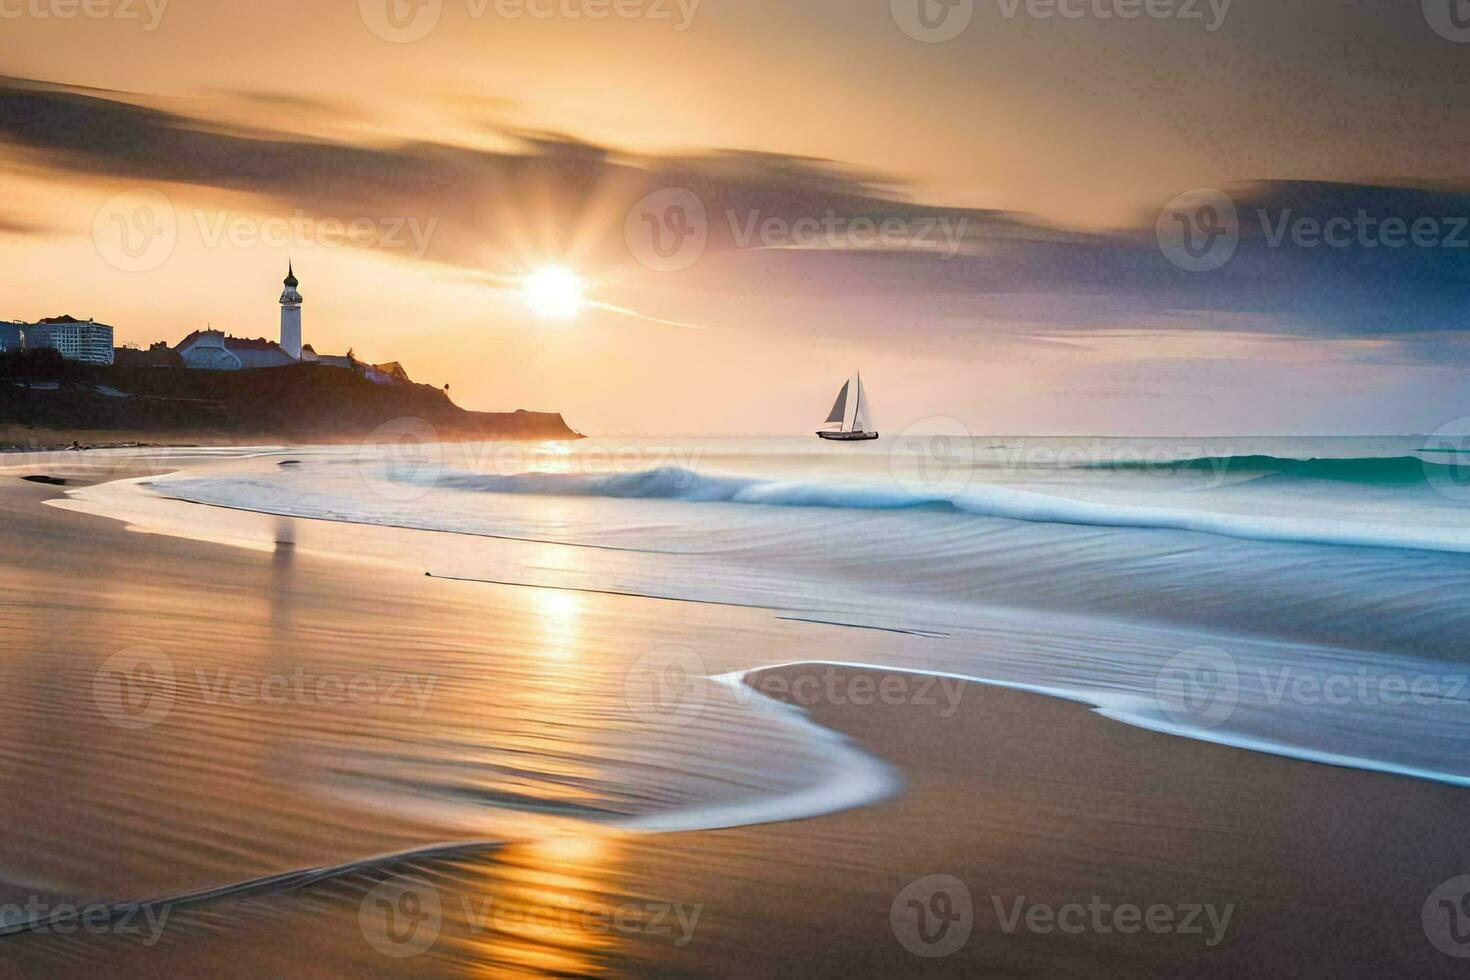 sunset on the beach, lighthouse, lighthouse, lighthouse, lighthouse, lighthouse, lighthouse, lighthouse. AI-Generated photo